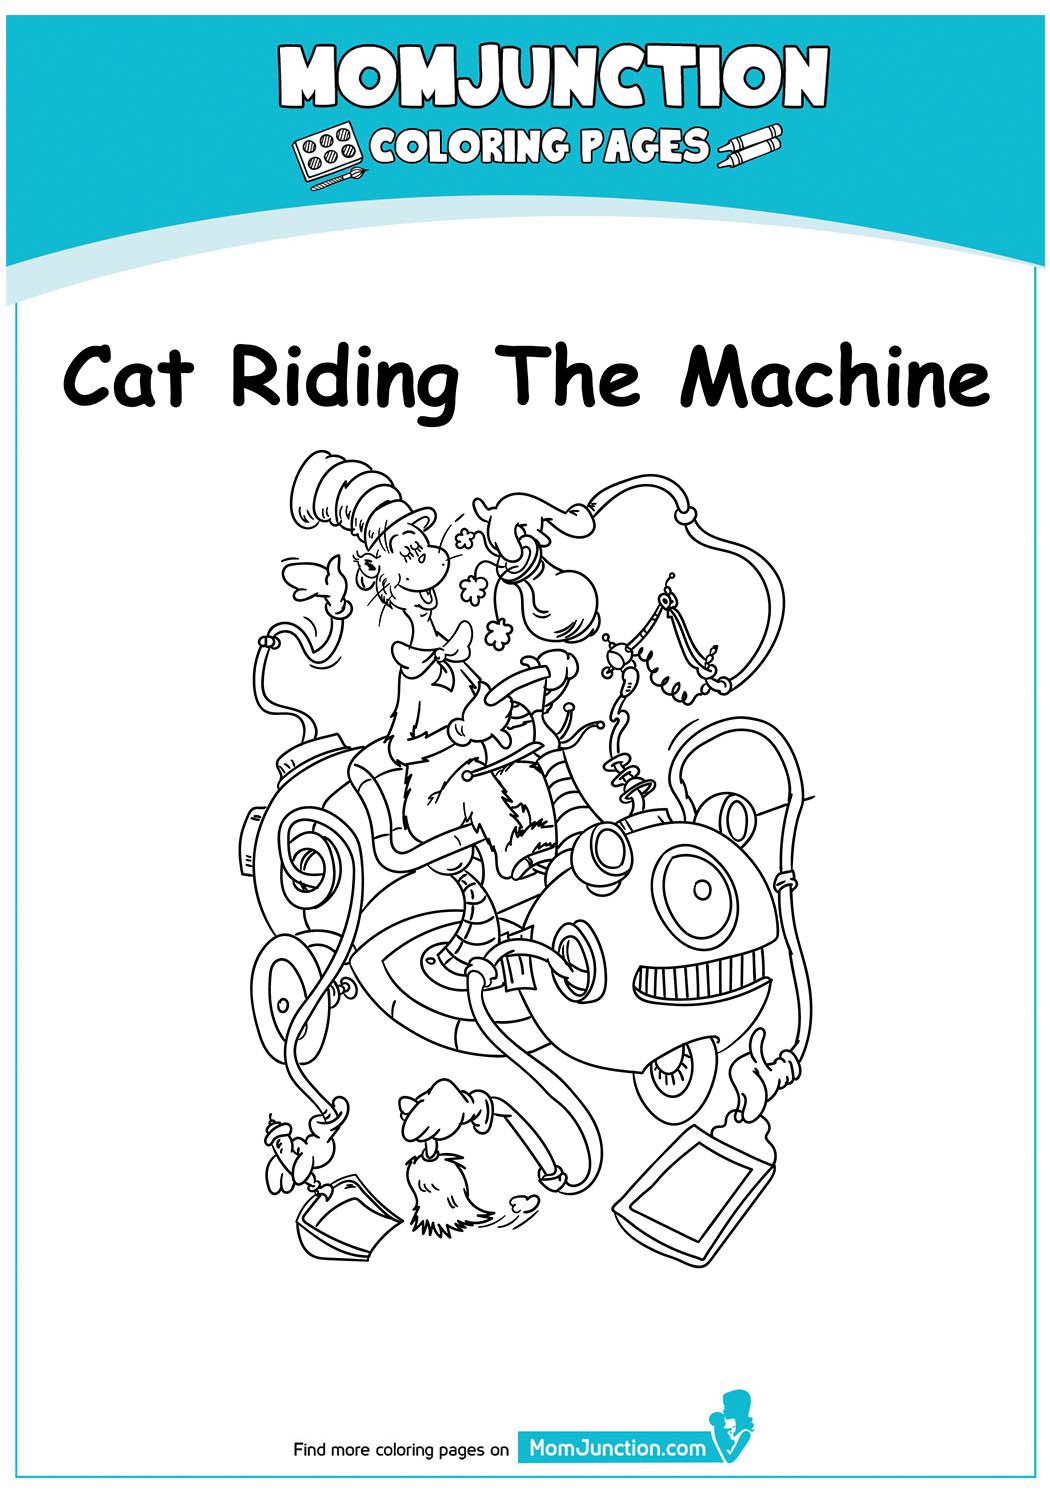 Cat-Riding-The-Machine-17